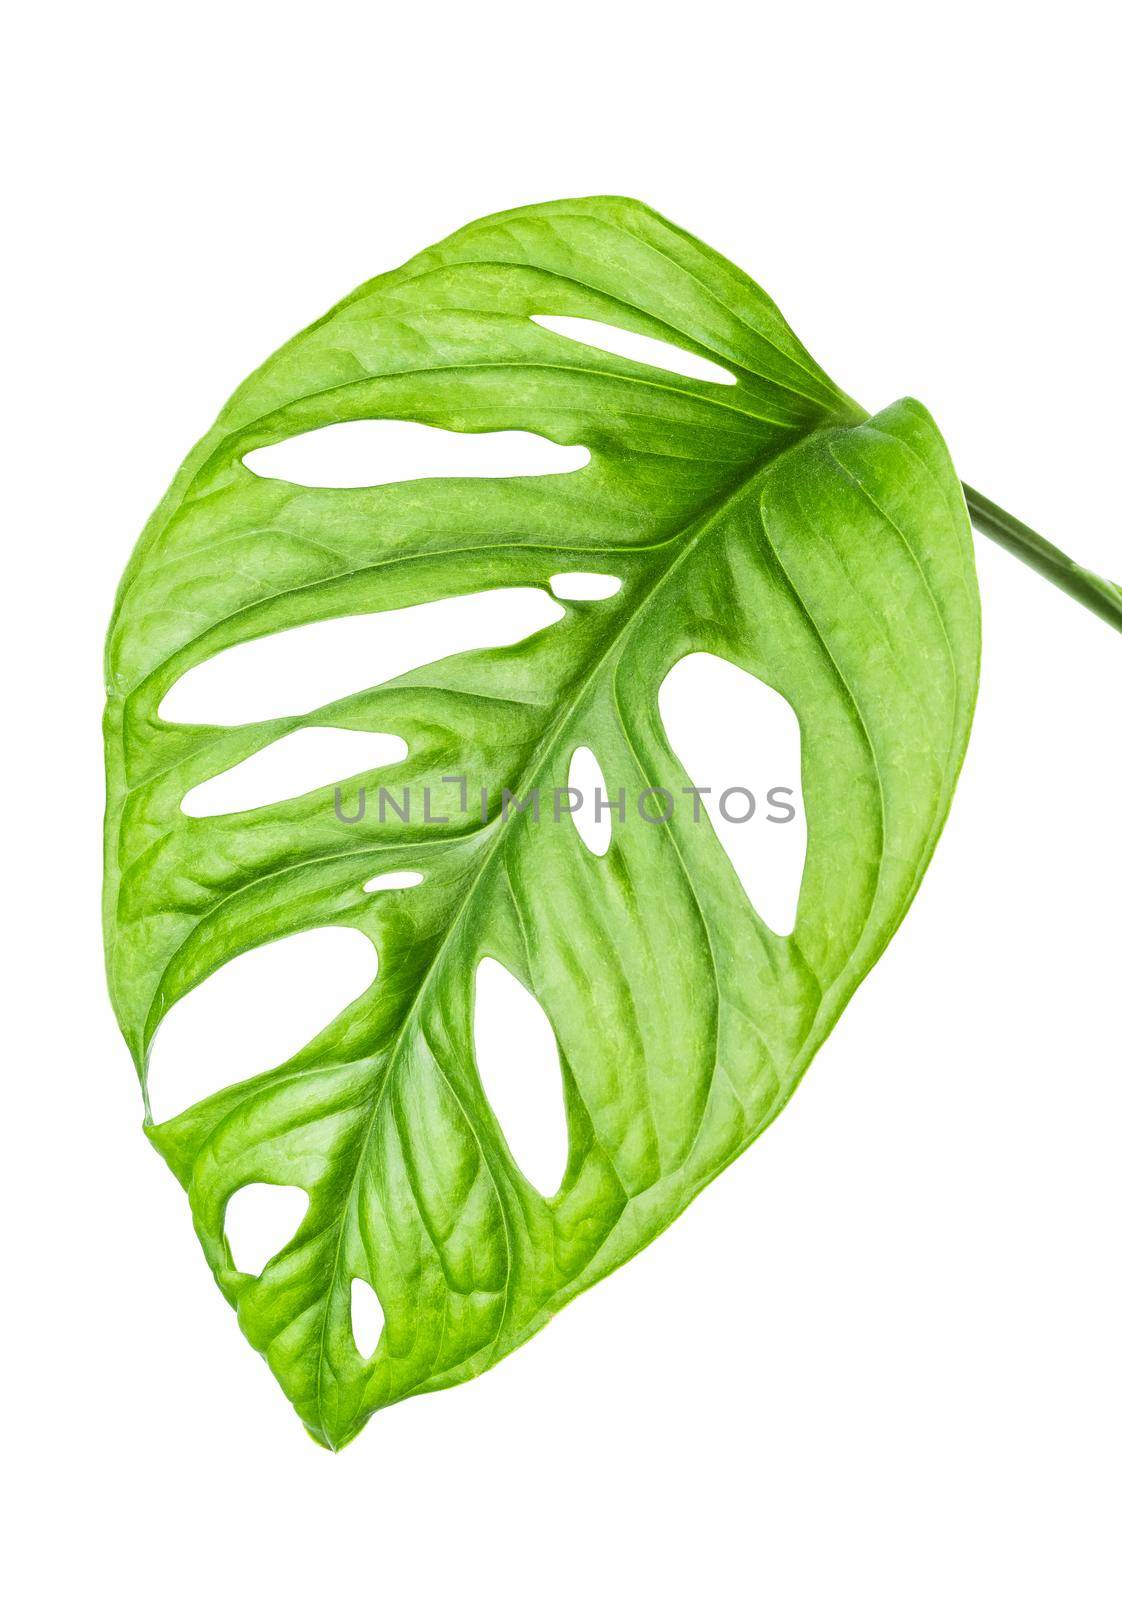 Monstera Adansonii or Monkey Mask Leaf isolated by Syvanych